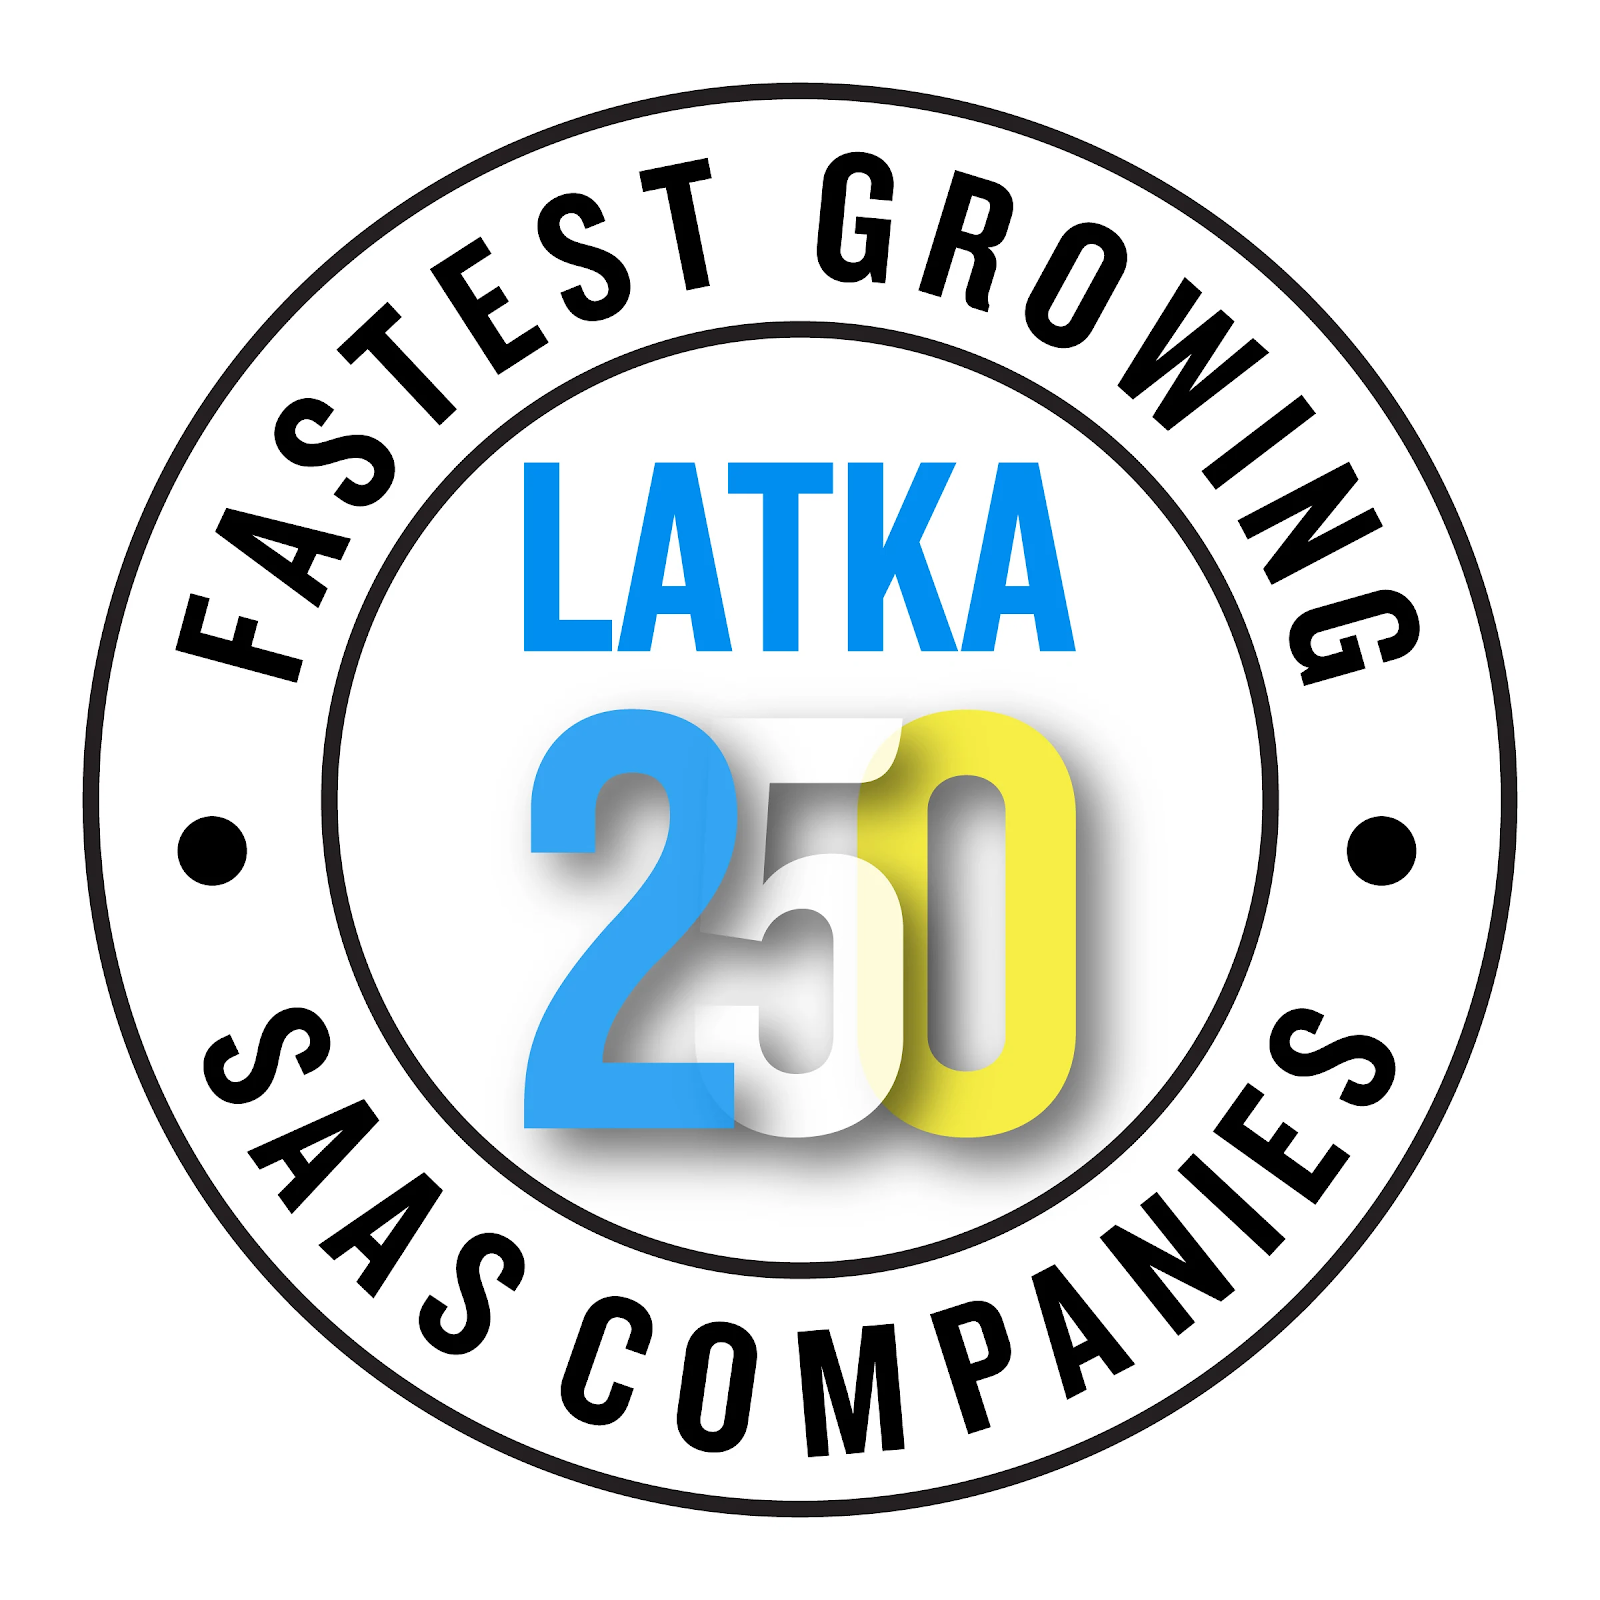 Rokt makes Latka 250 Fastest Growing SaaS Company list